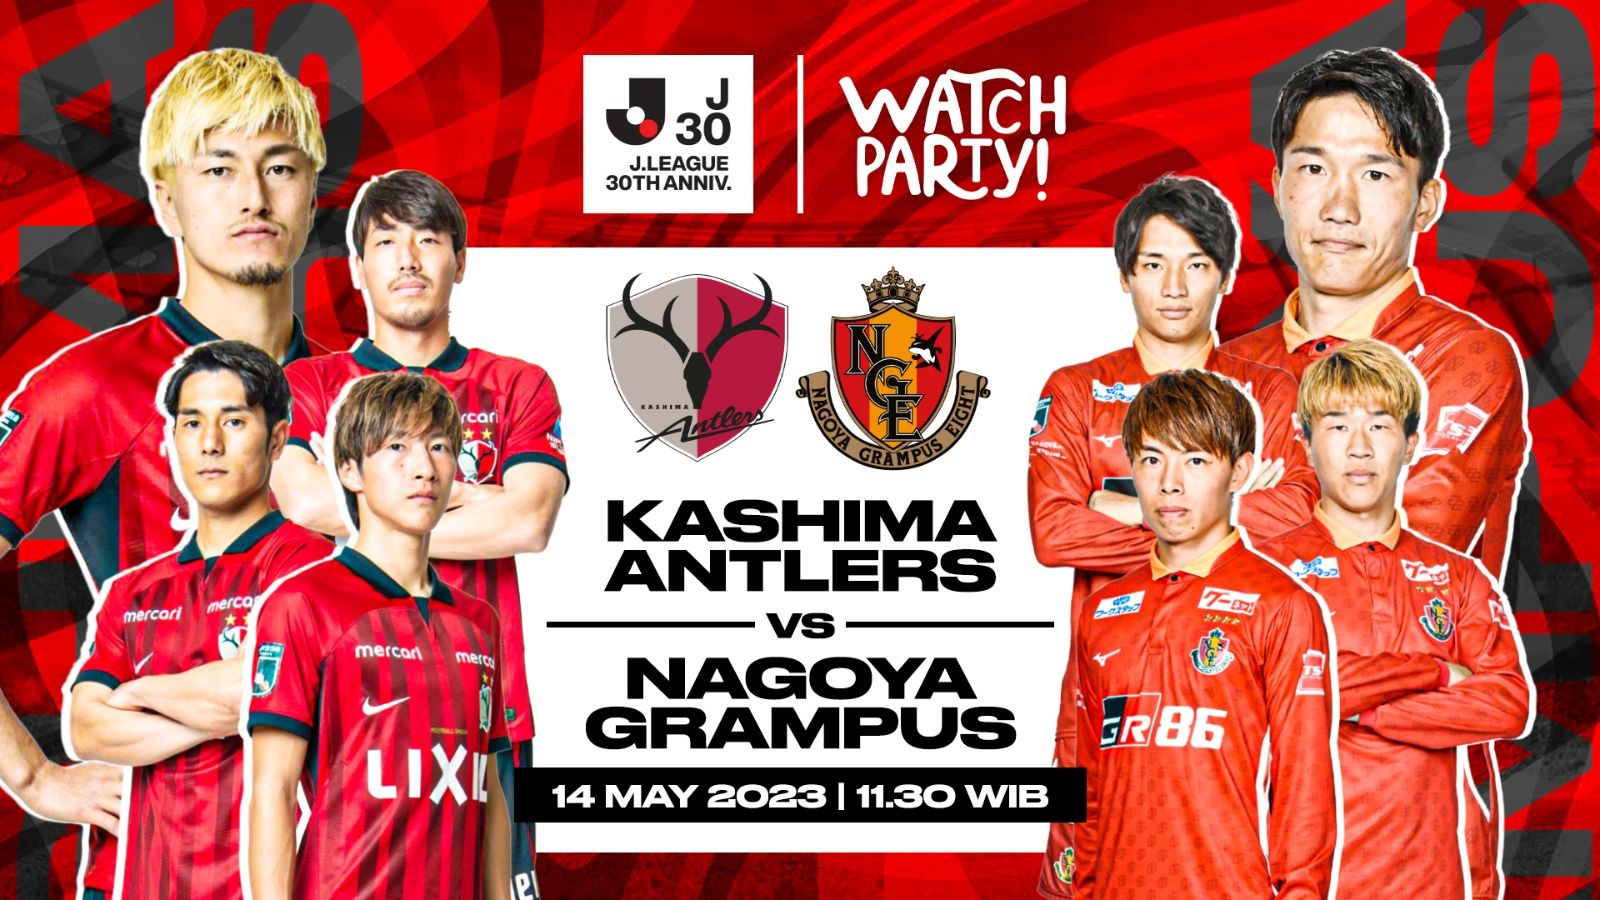 Laga Kashima Antlers vs Nagoya Grampus warnai perayaan 30 tahun J.League. (Dede Mauladi/Skor.id)